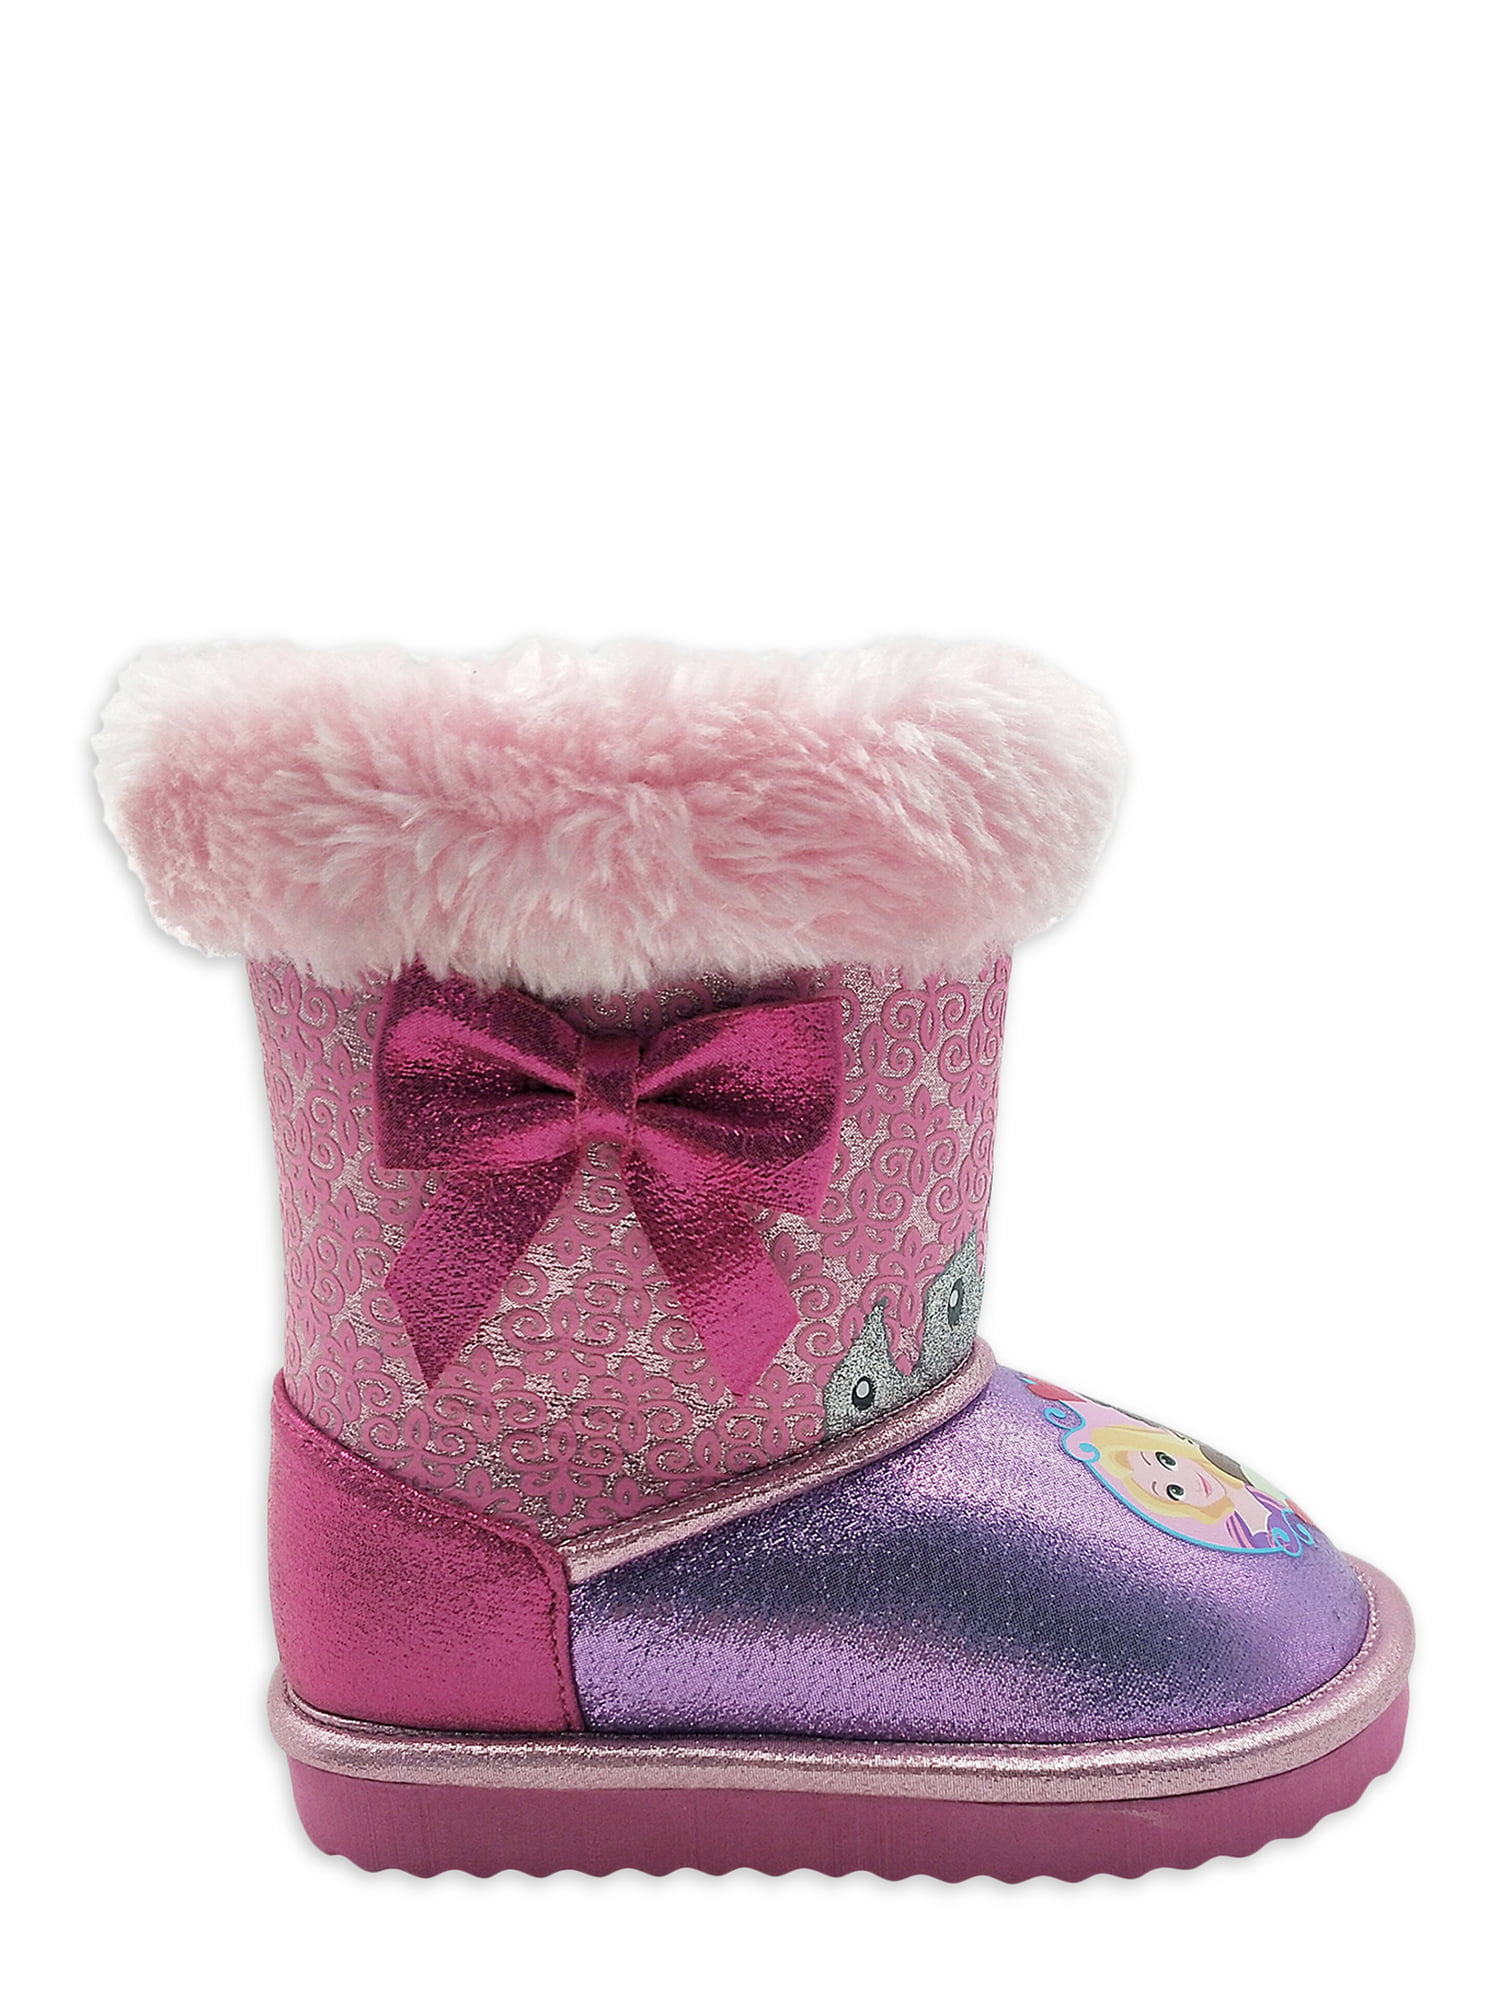 Disney Princess Fur Lined Winter Shearling Boot (Toddler Girls) -  Walmart.com